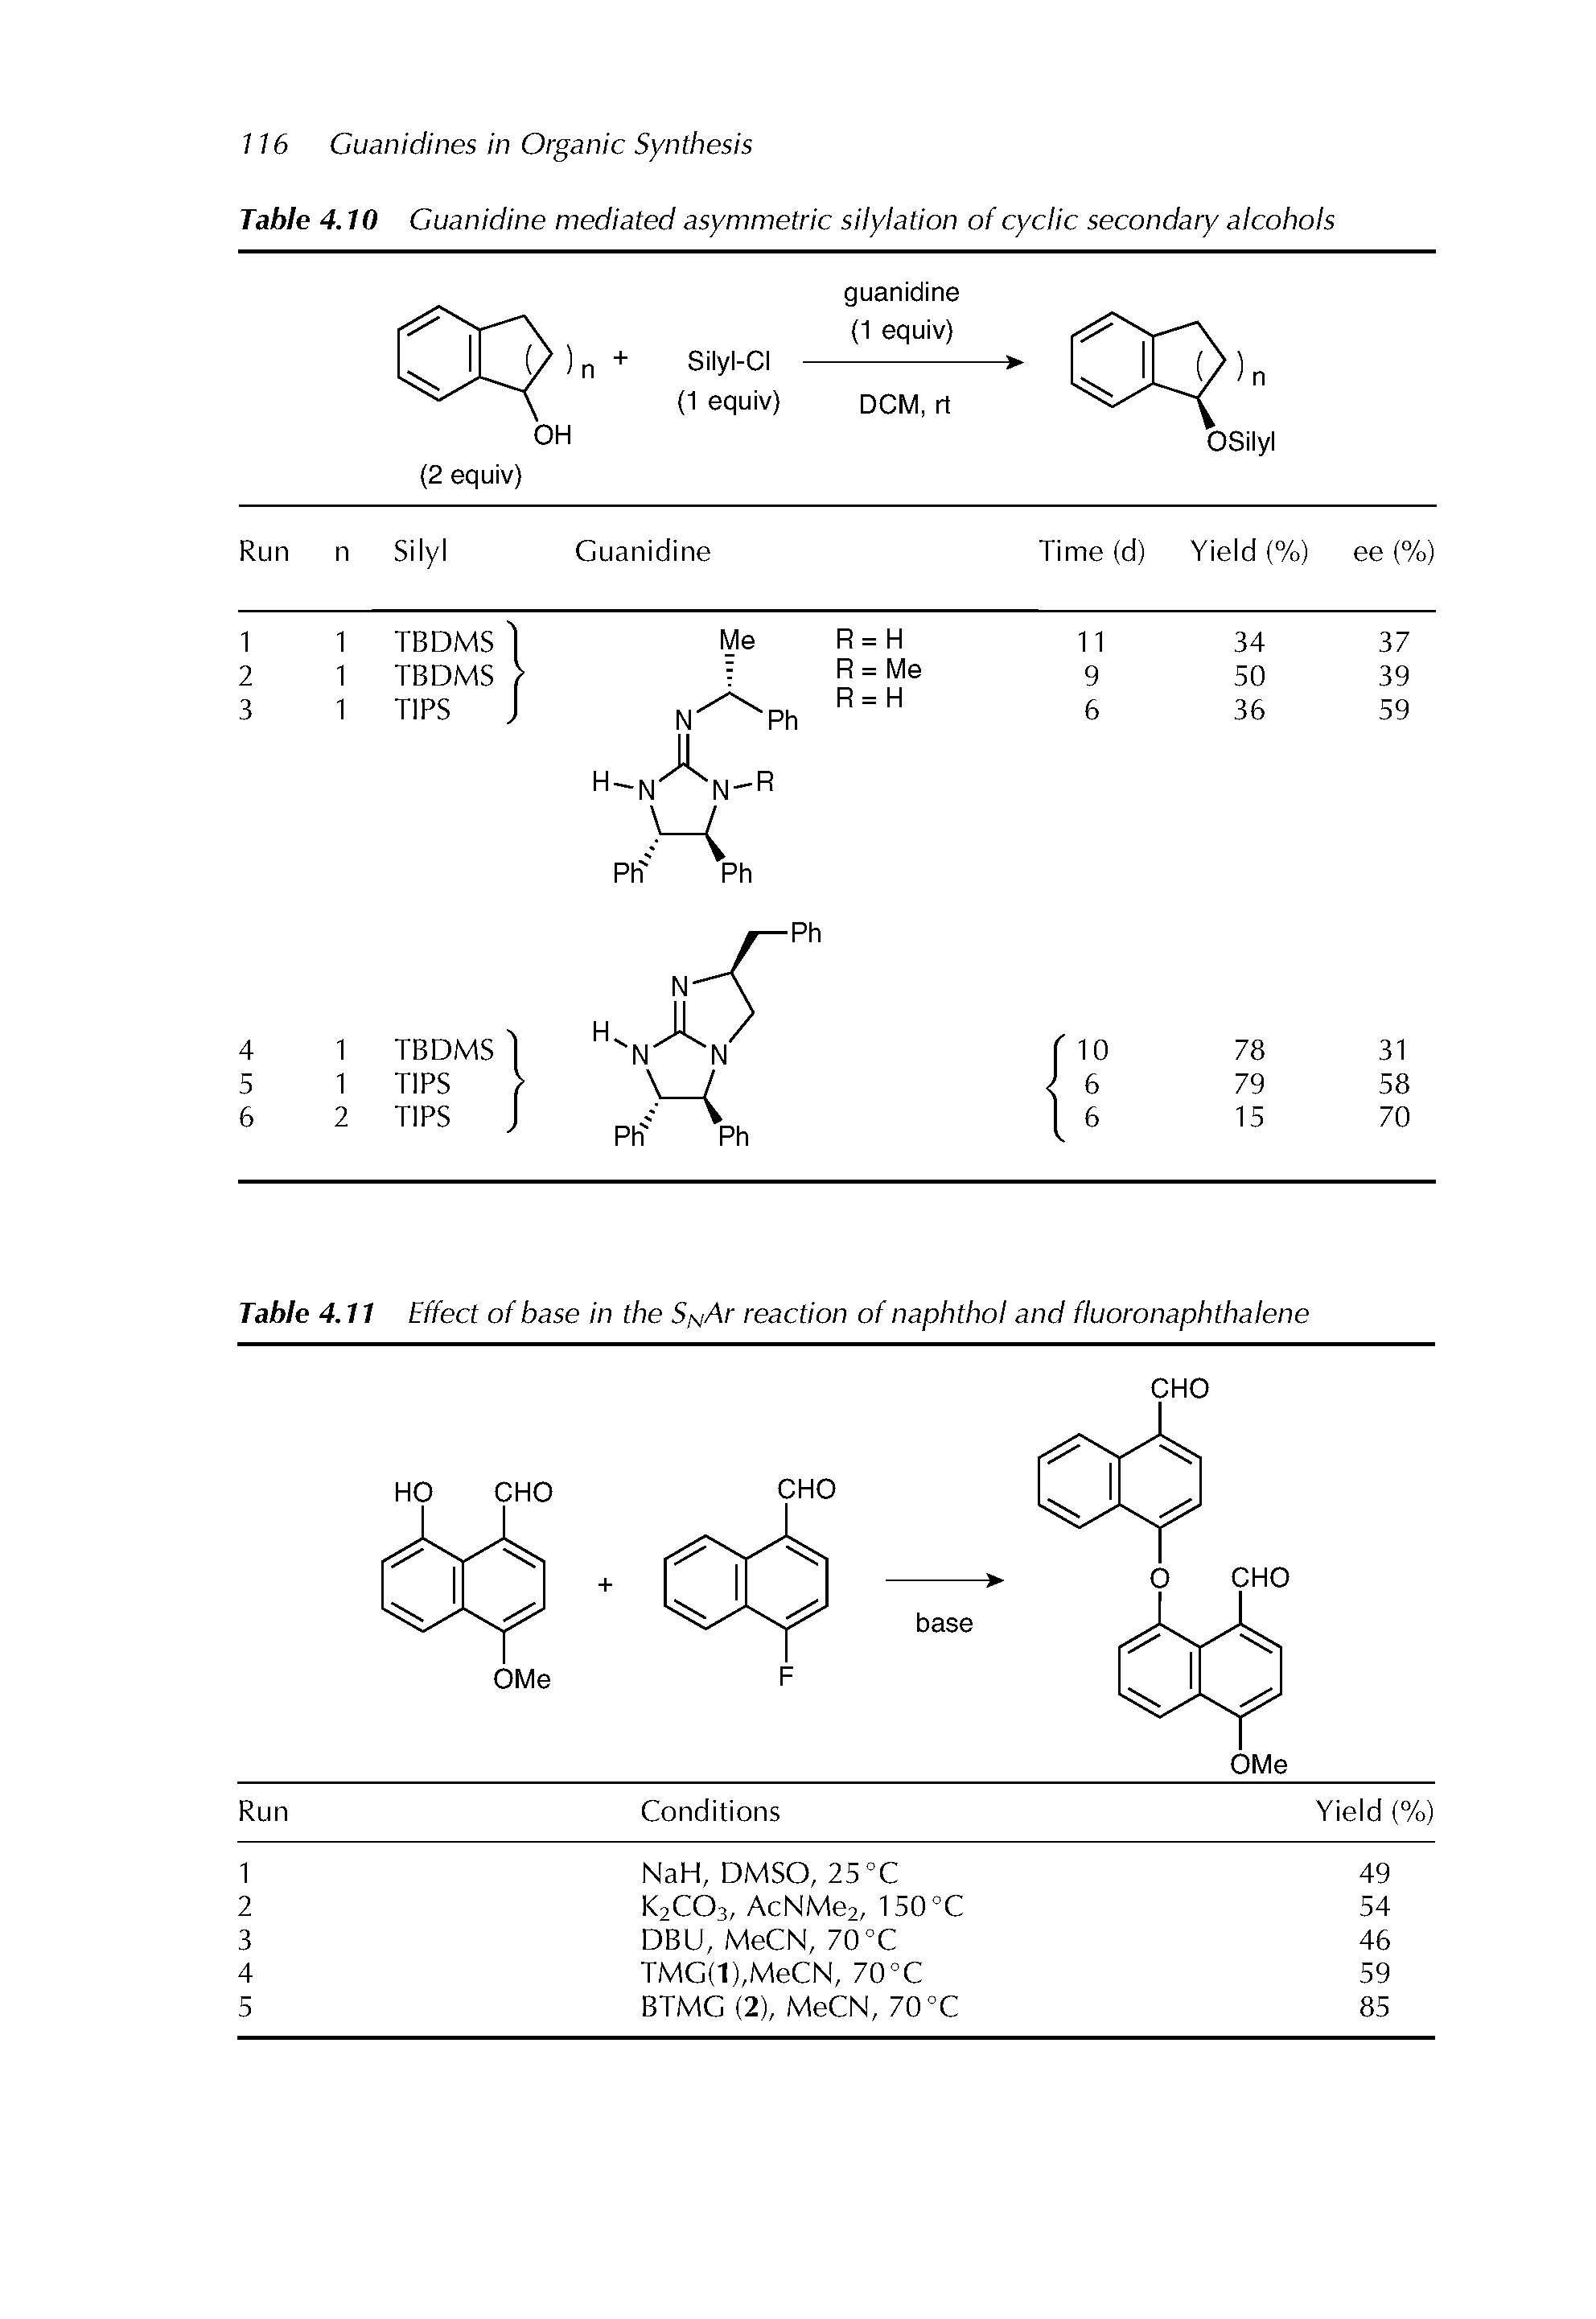 Table 4.10 Guanidine mediated asymmetric silylation of cyclic secondary alcohols...